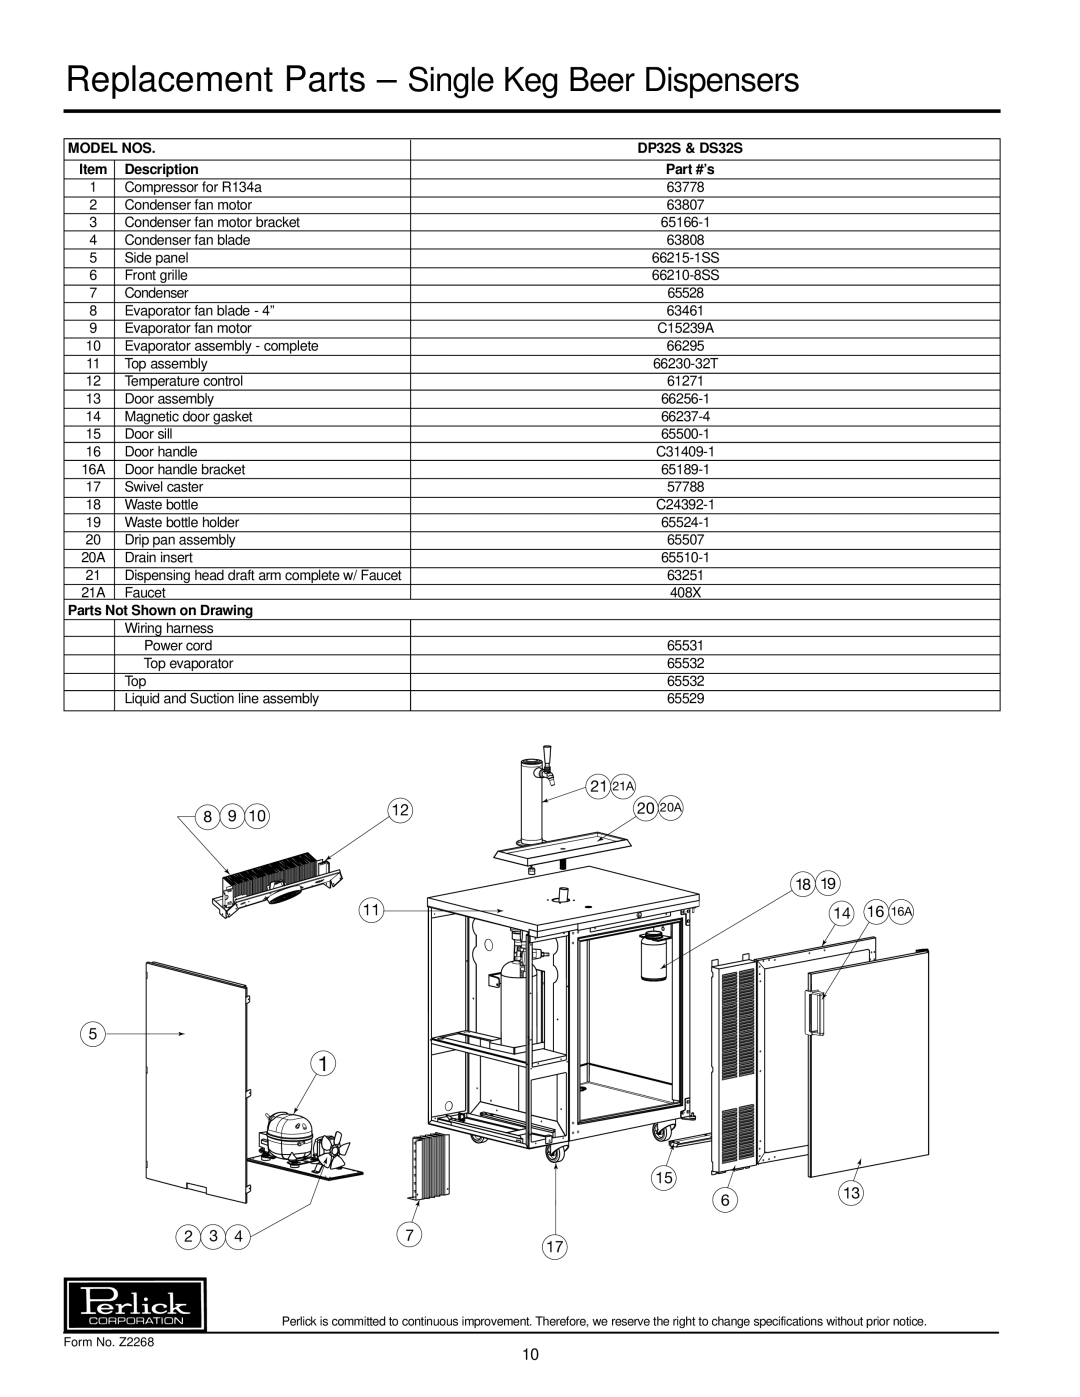 Perlick Replacement Parts - Single Keg Beer Dispensers, 21 21A, 14 16 16A, Model Nos, DP32S & DS32S, Description 